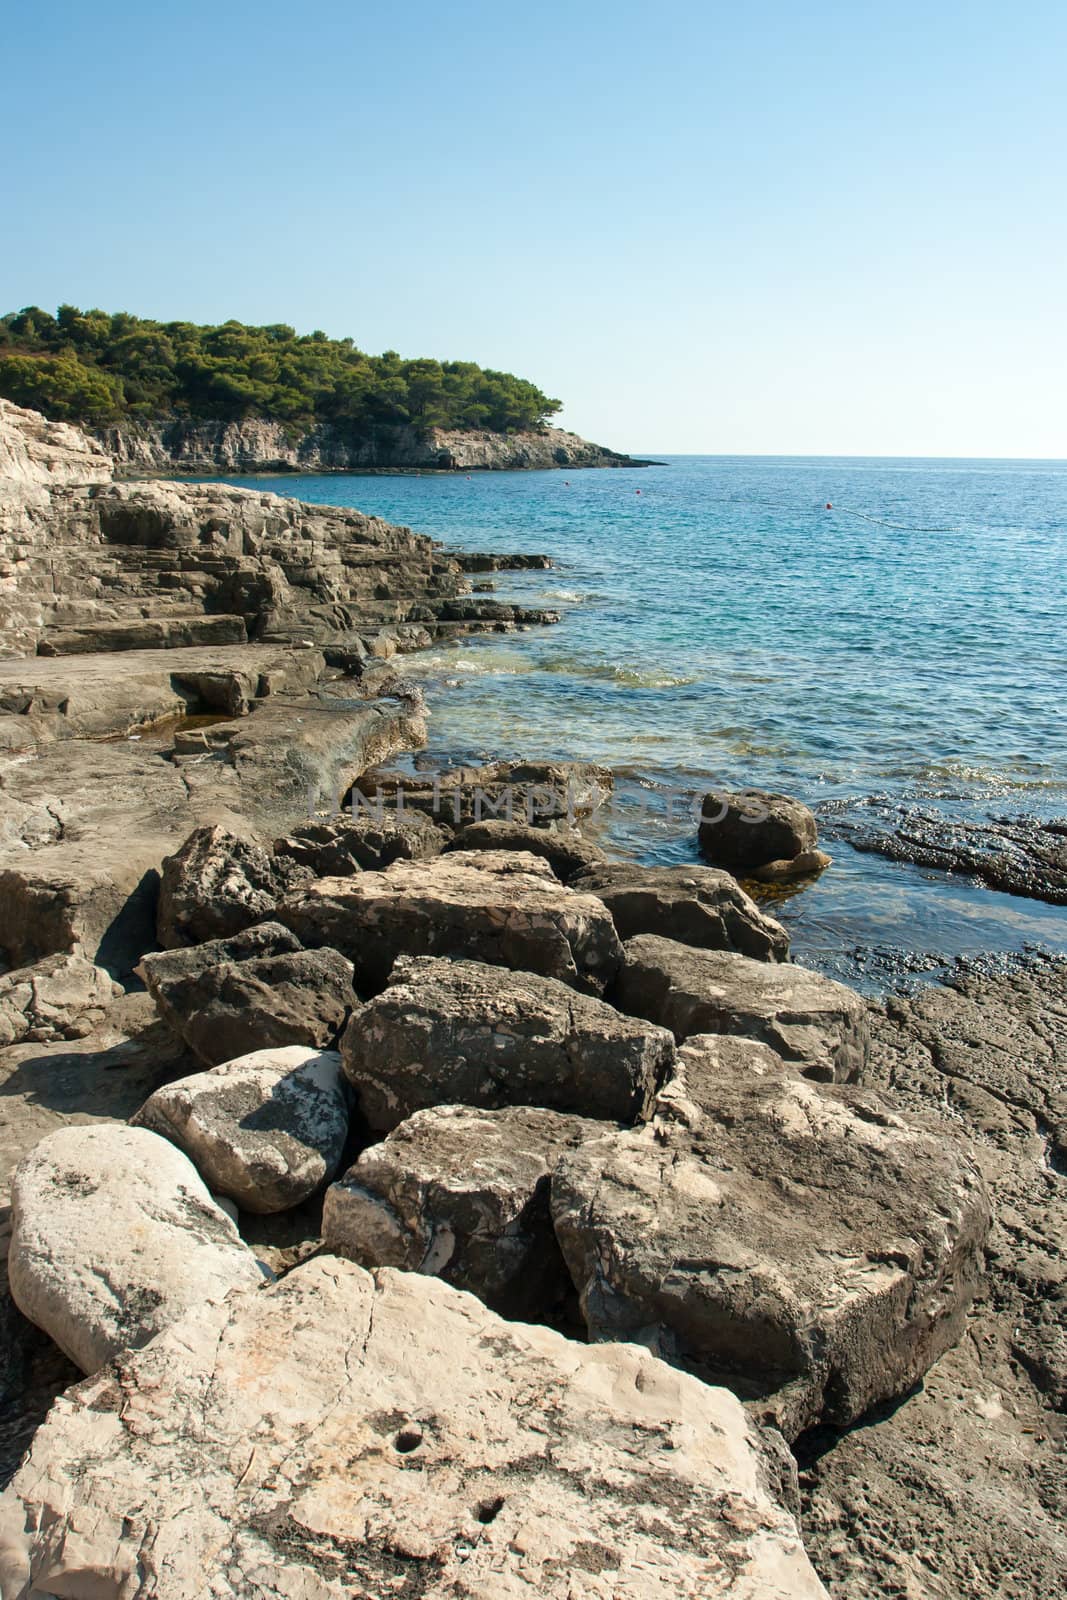 beautiful rocky beach in croatia